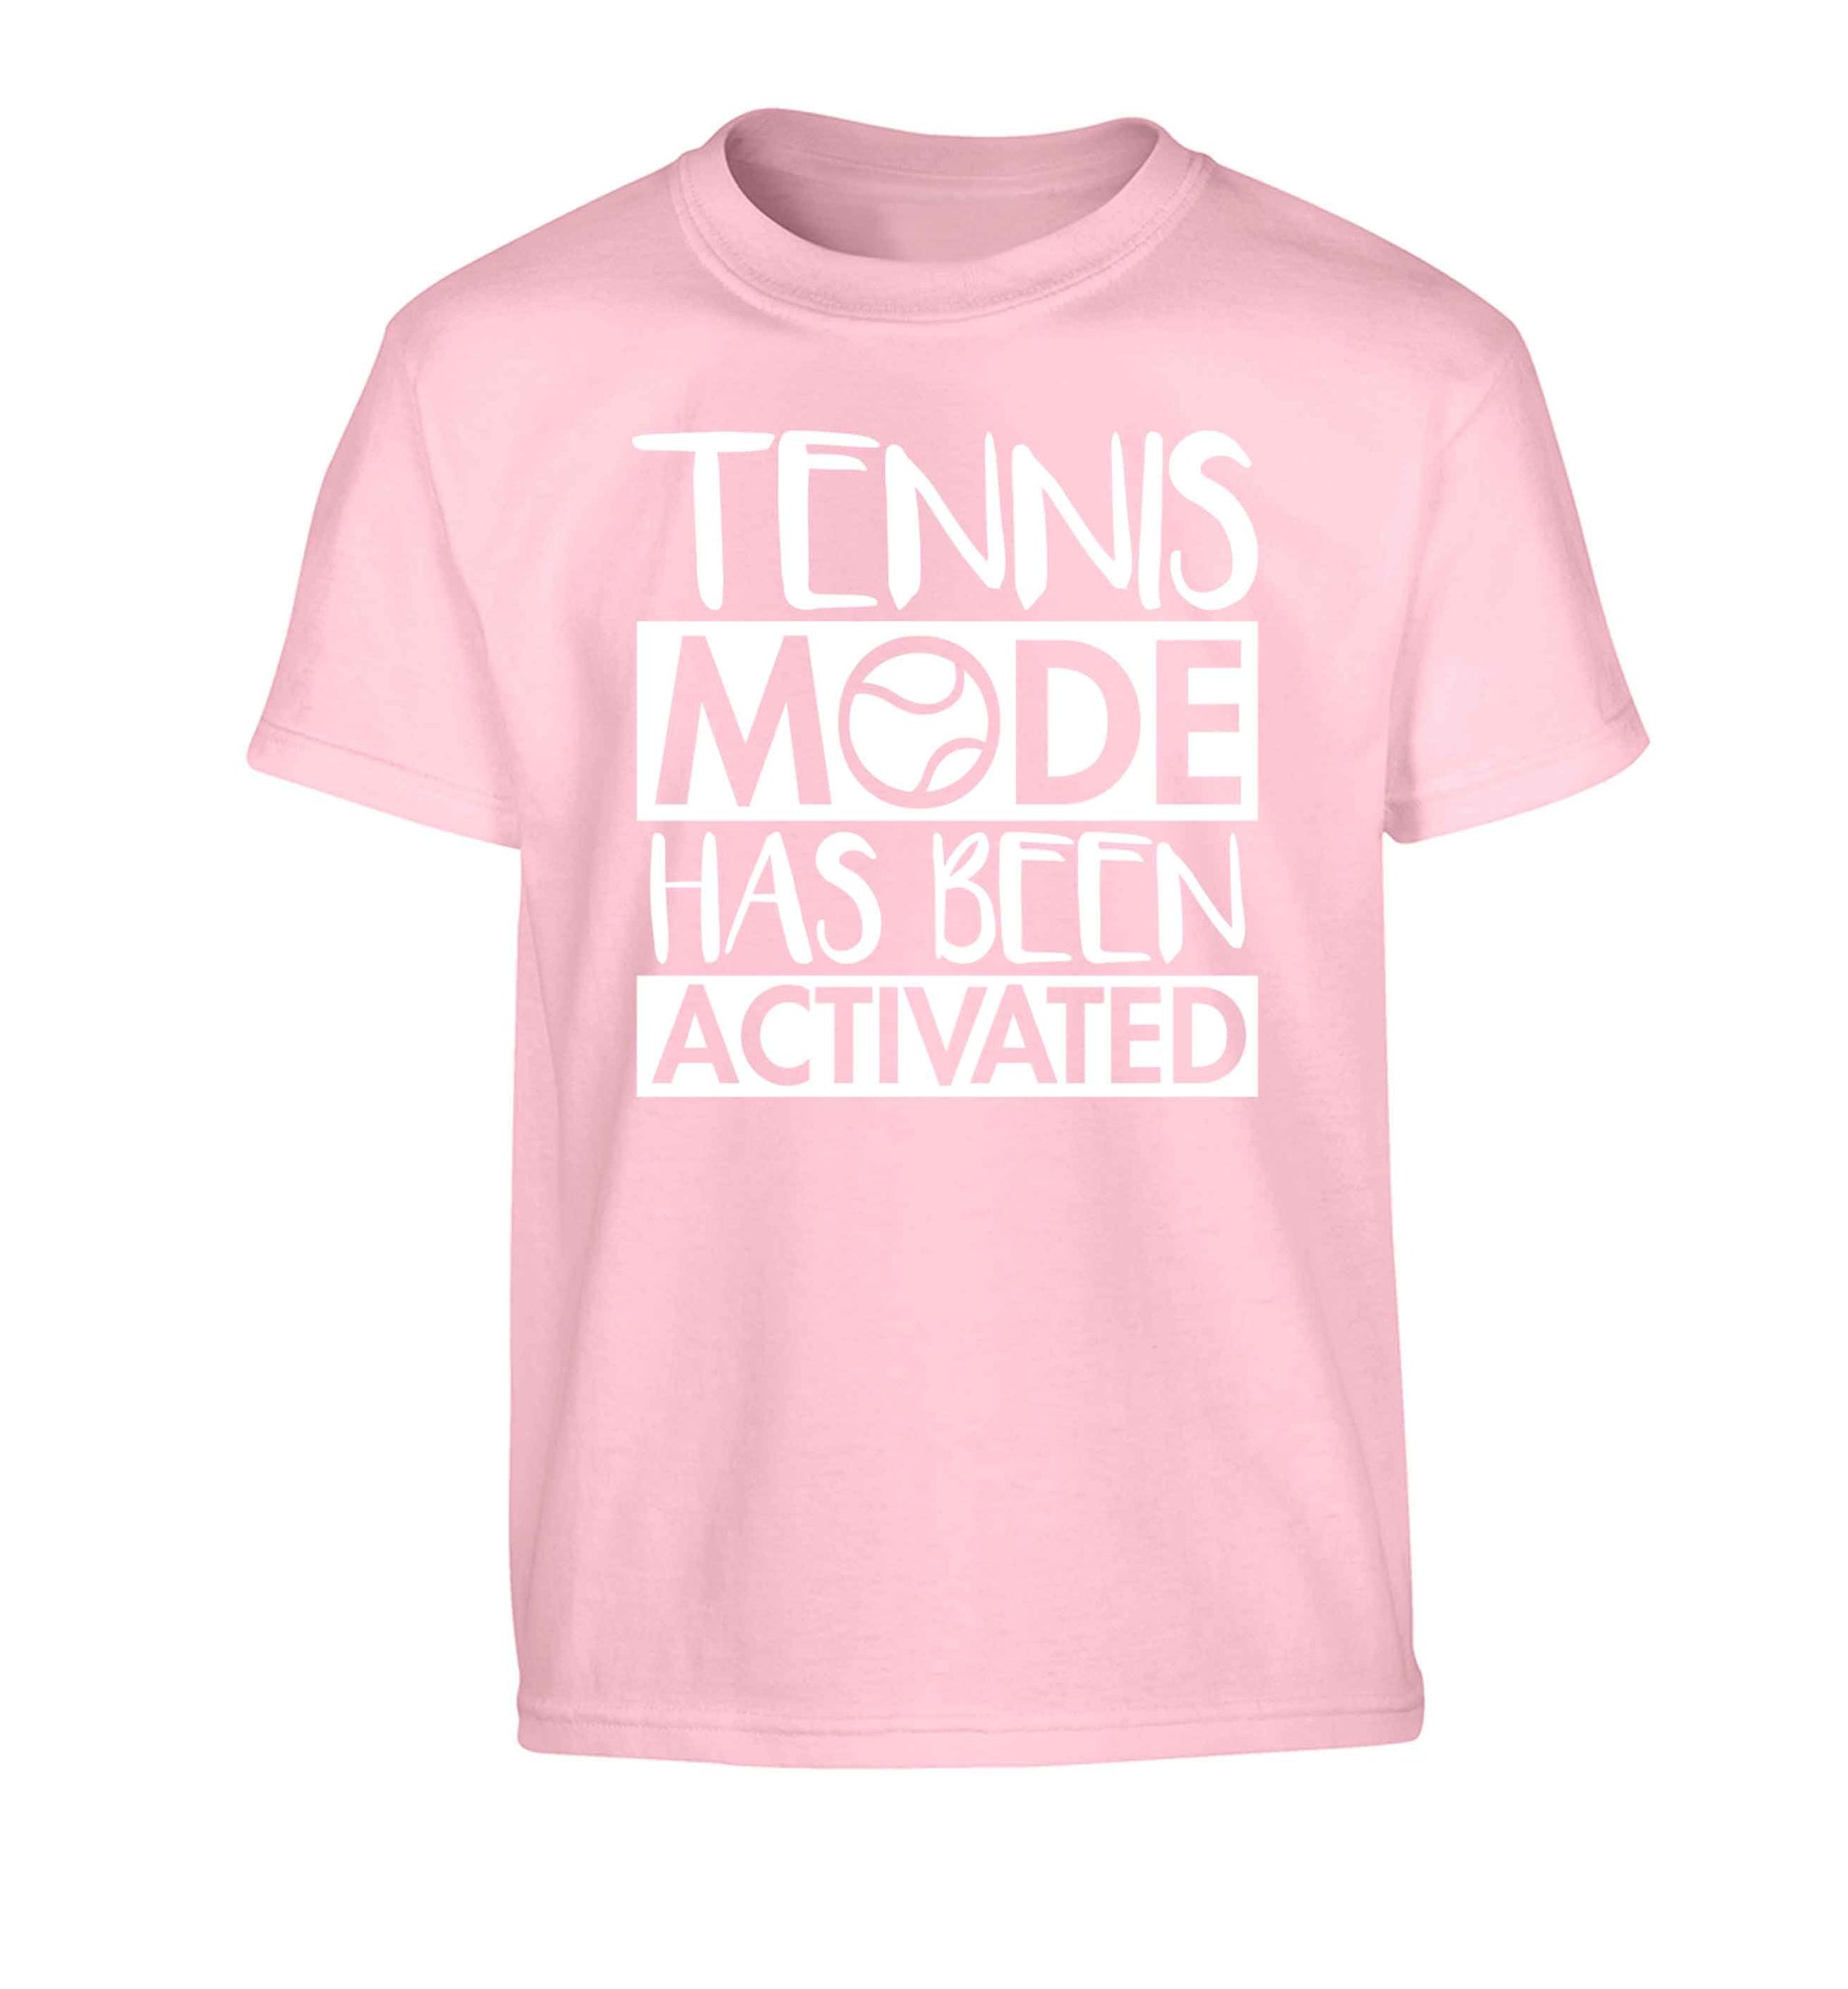 Tennis mode has been activated Children's light pink Tshirt 12-13 Years